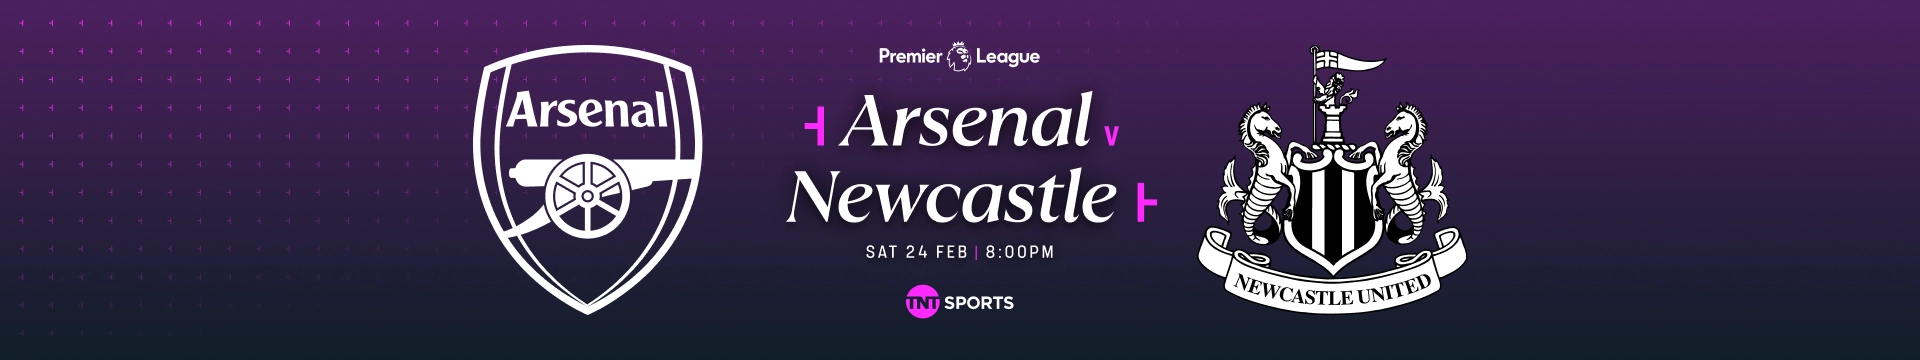 Arsenal v Newcastle - Saturday 24 February at 8pm on TNT Sports